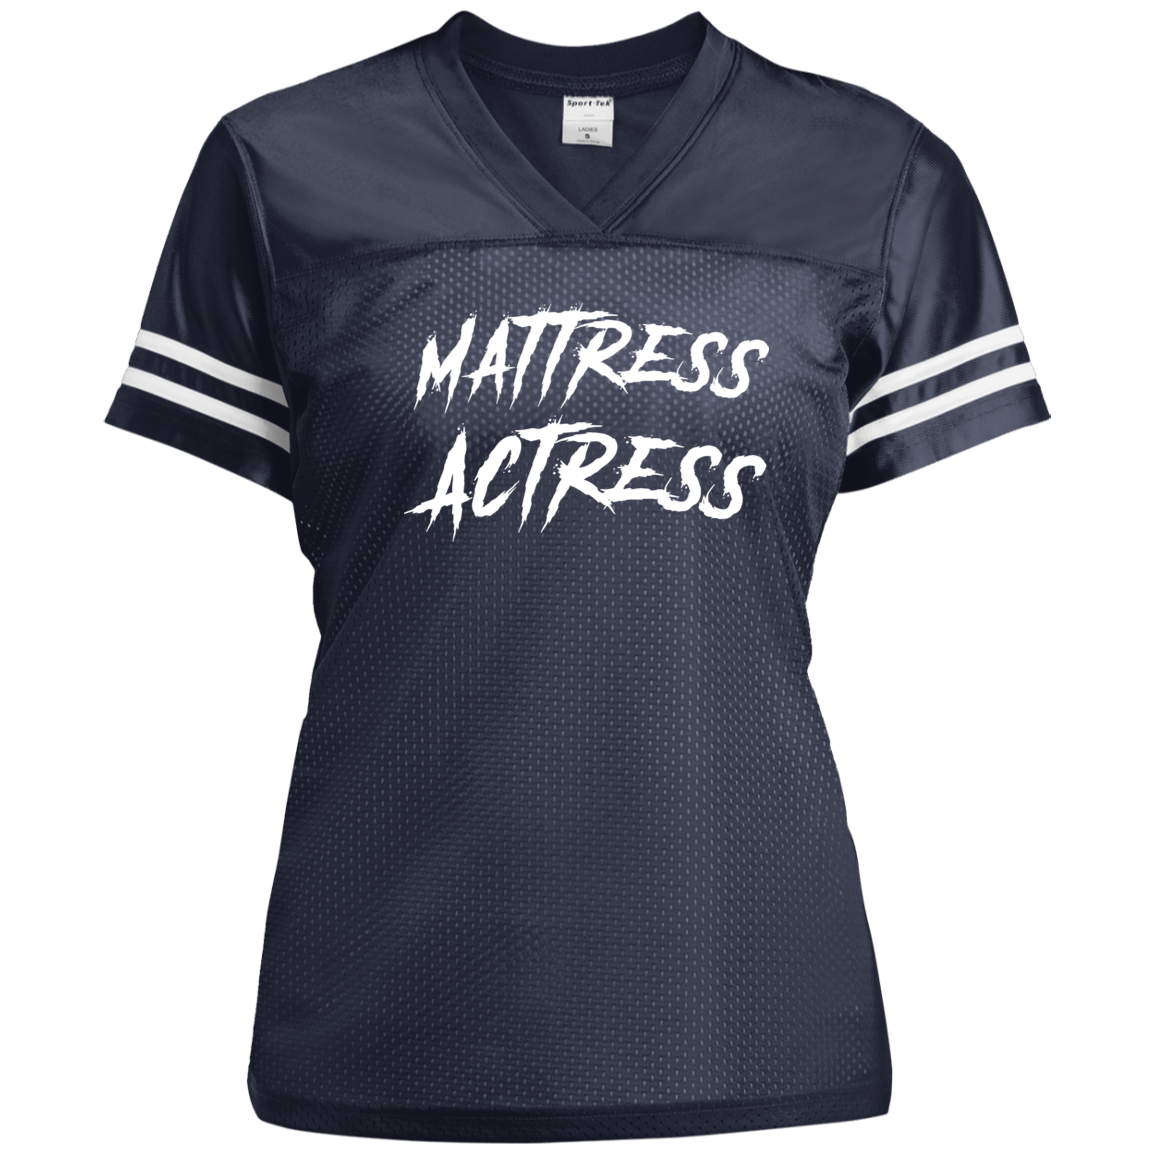 "Mattress Actress" Ladies' Replica Jersey